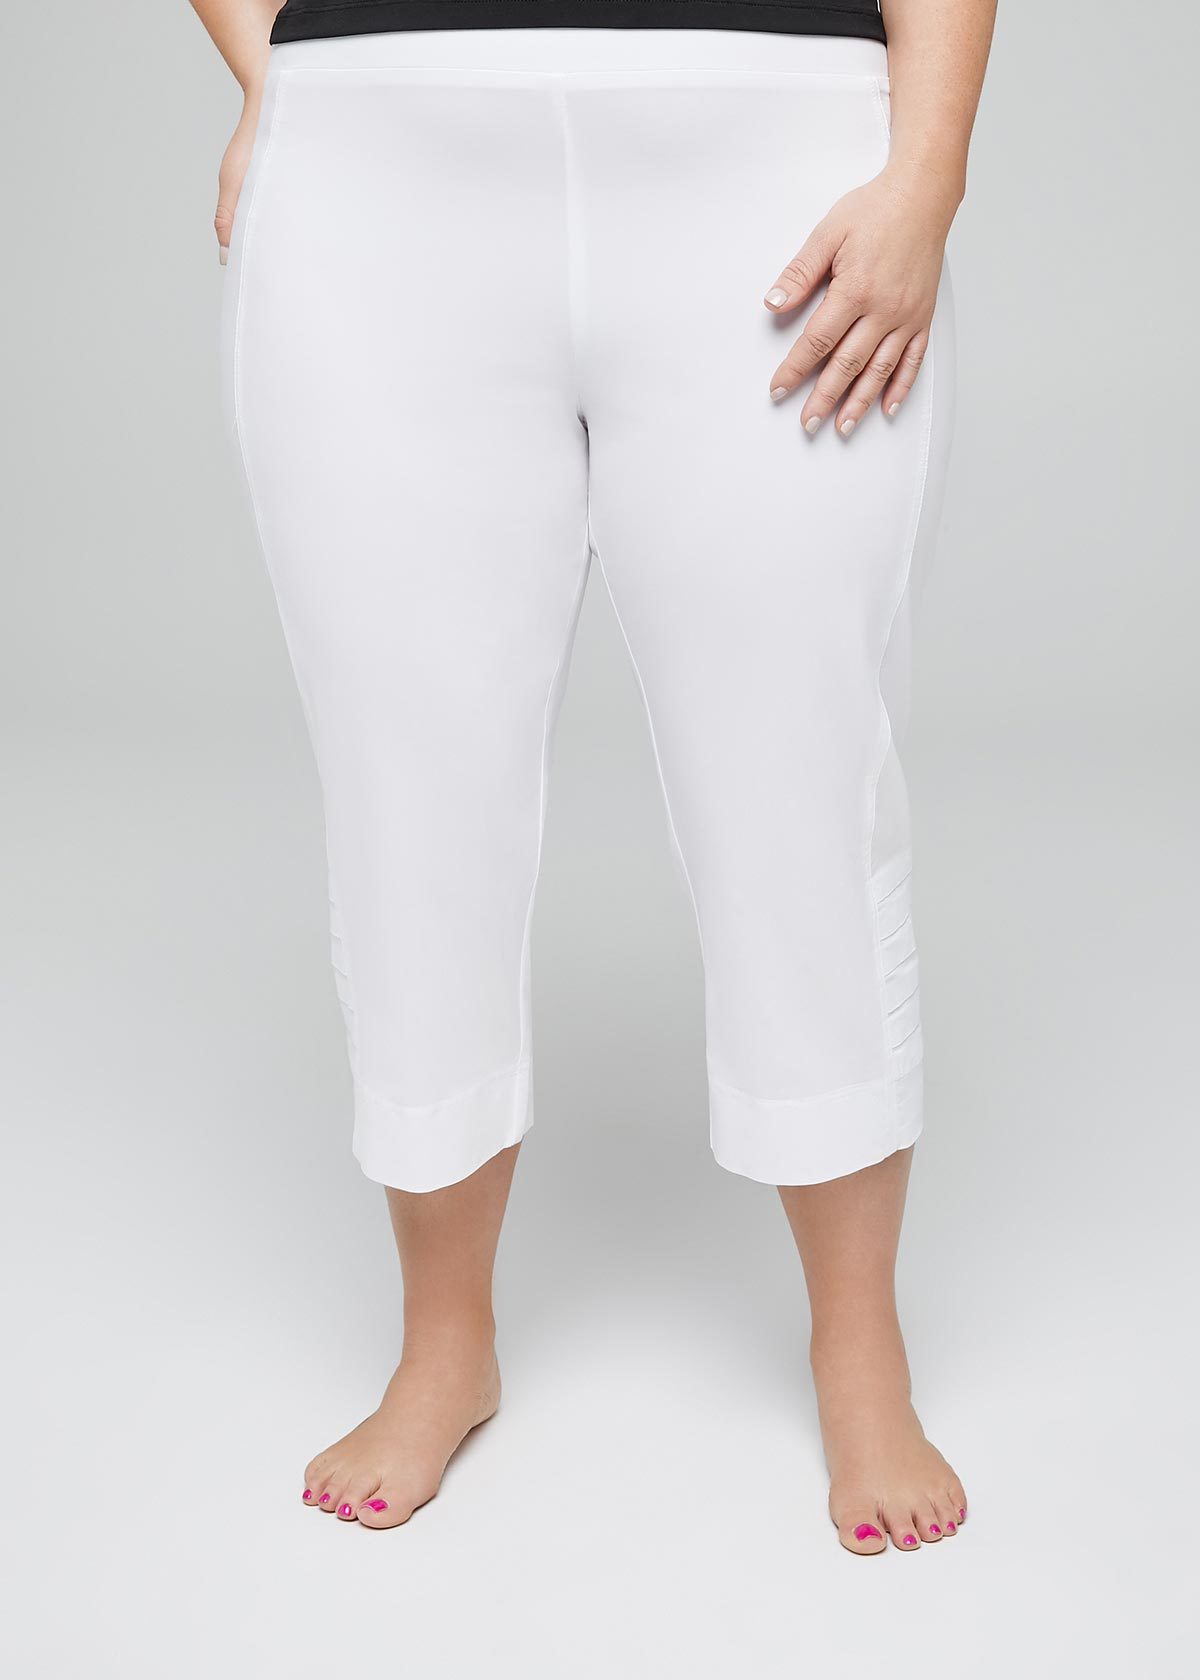 Shop Petite Trapeze Crop Pant in White, Sizes 12-30 | Taking Shape AU